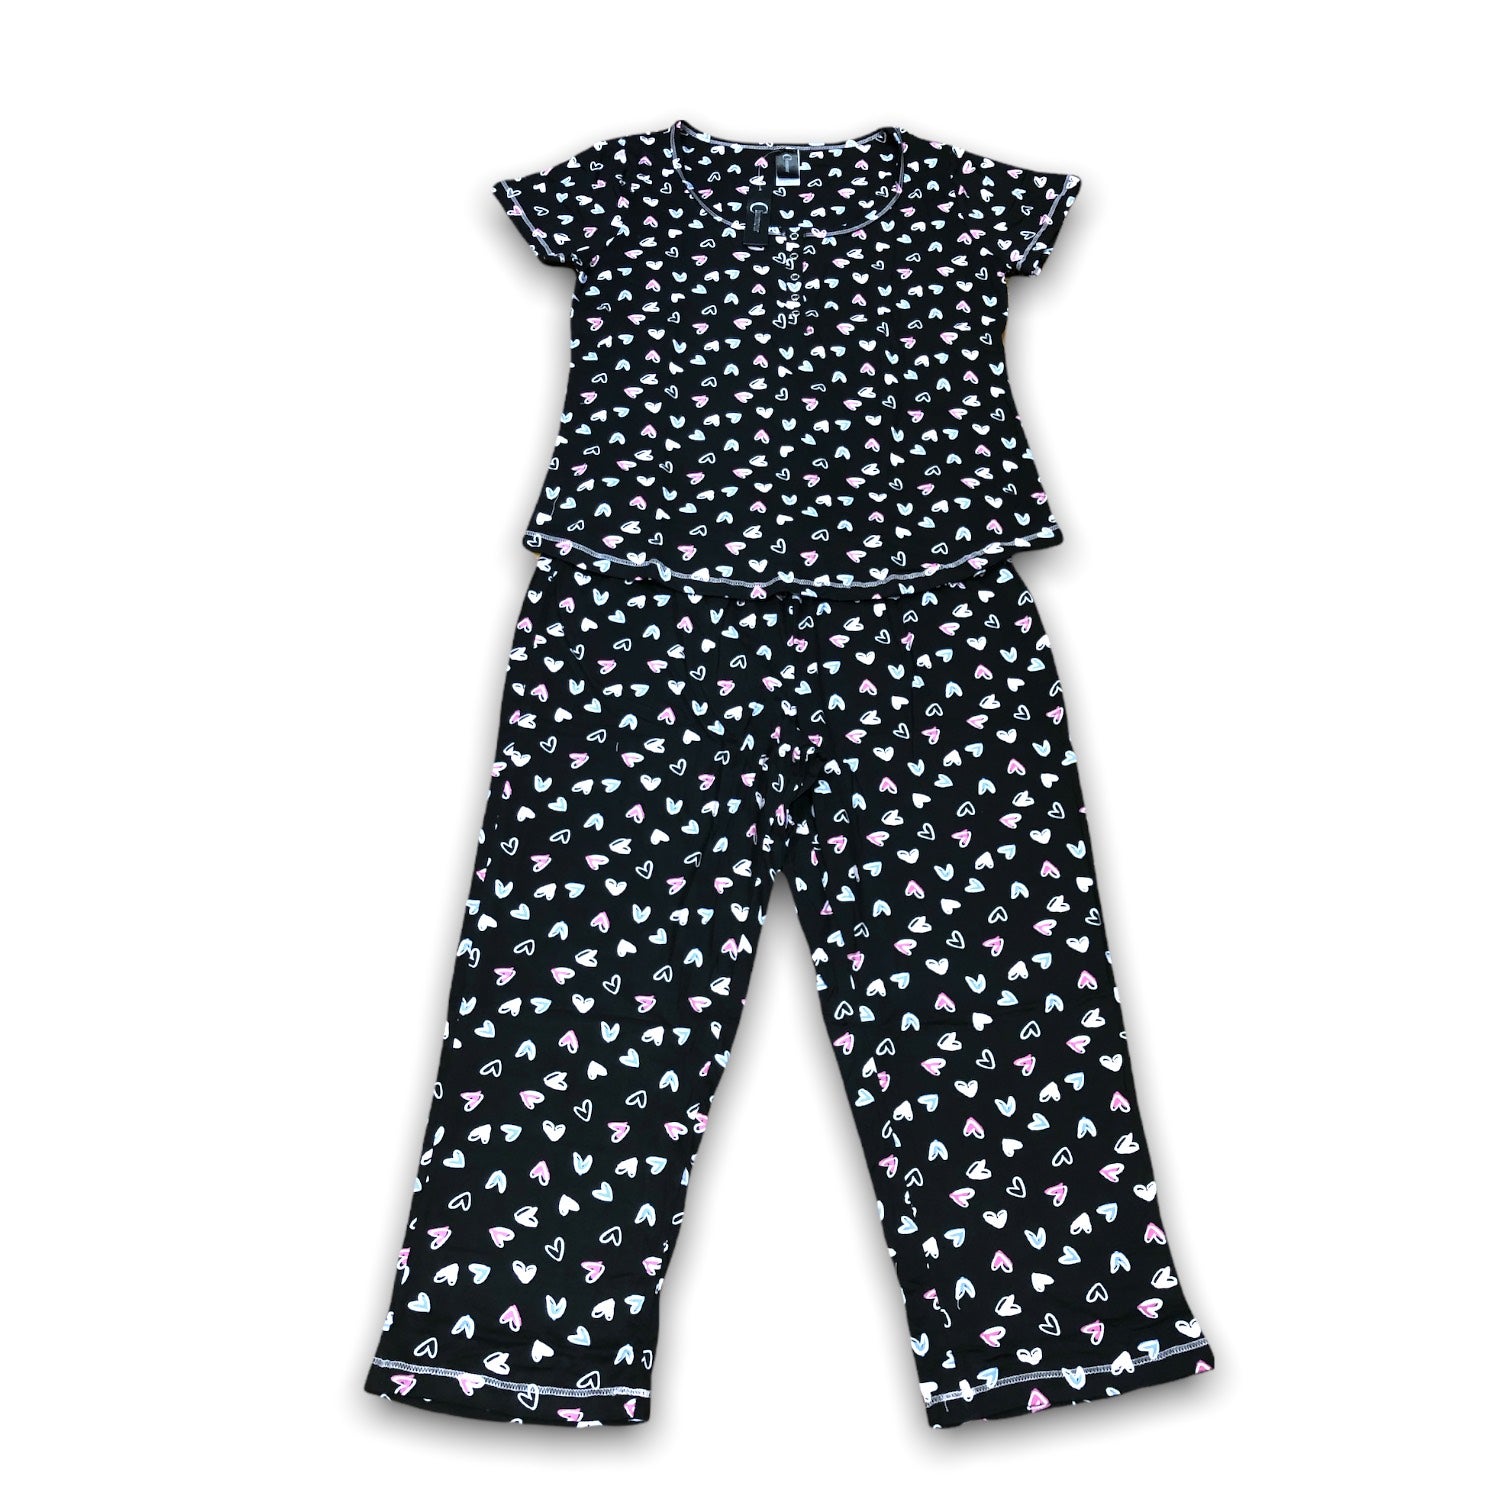 BULK BUY - Women's Peached Jersey Knit Capri Pajama Set with Placket (3-Pack)